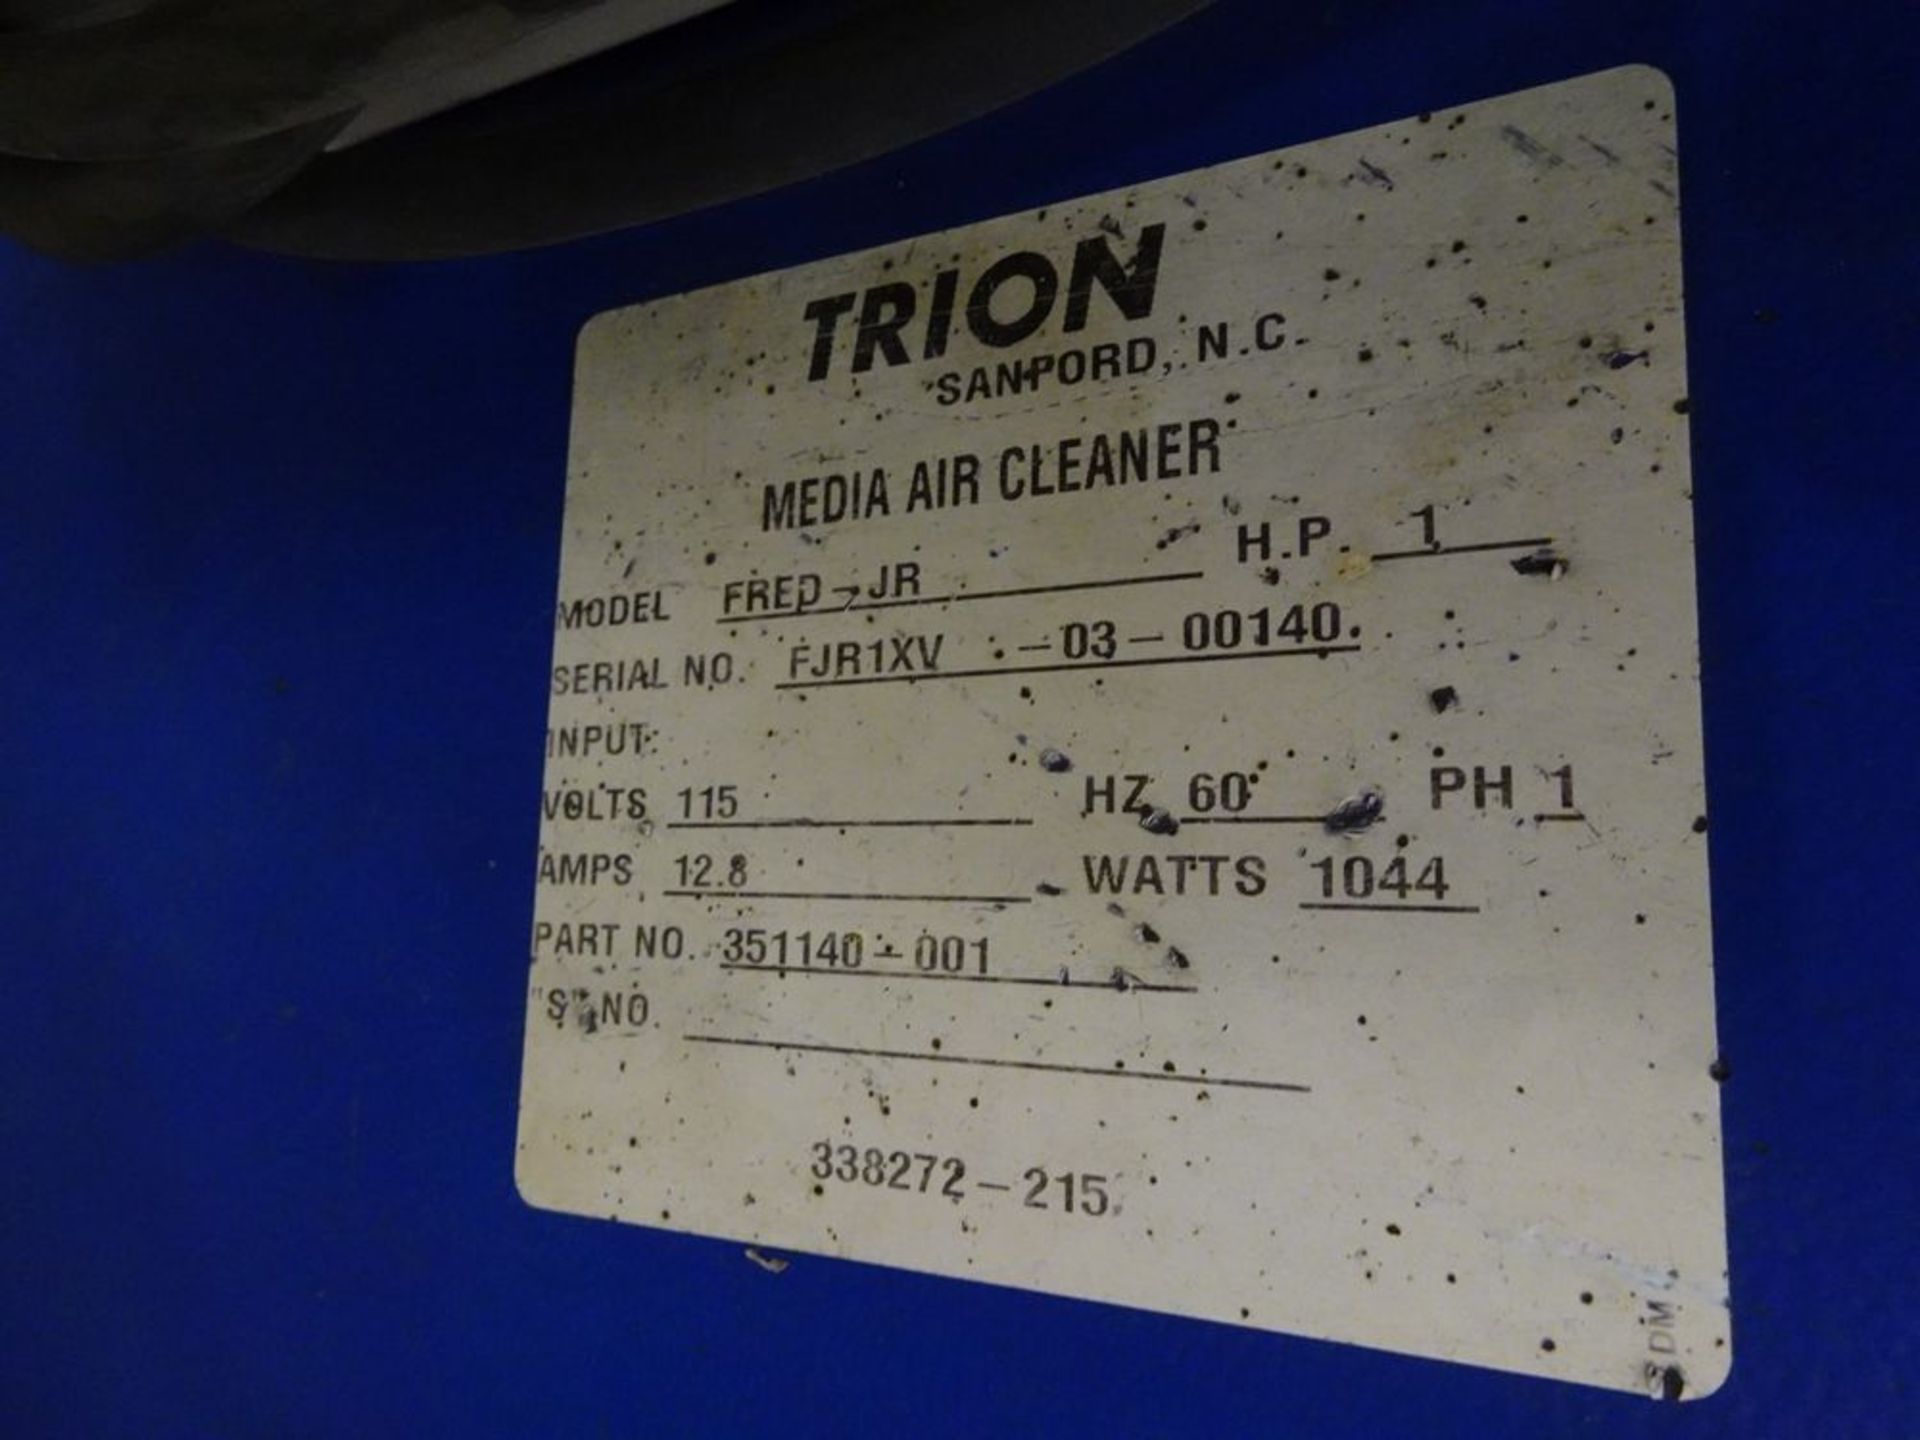 GRION MODEL FRED-JR MEDIA AIR CLEANER, S/N 00140 - Image 2 of 2